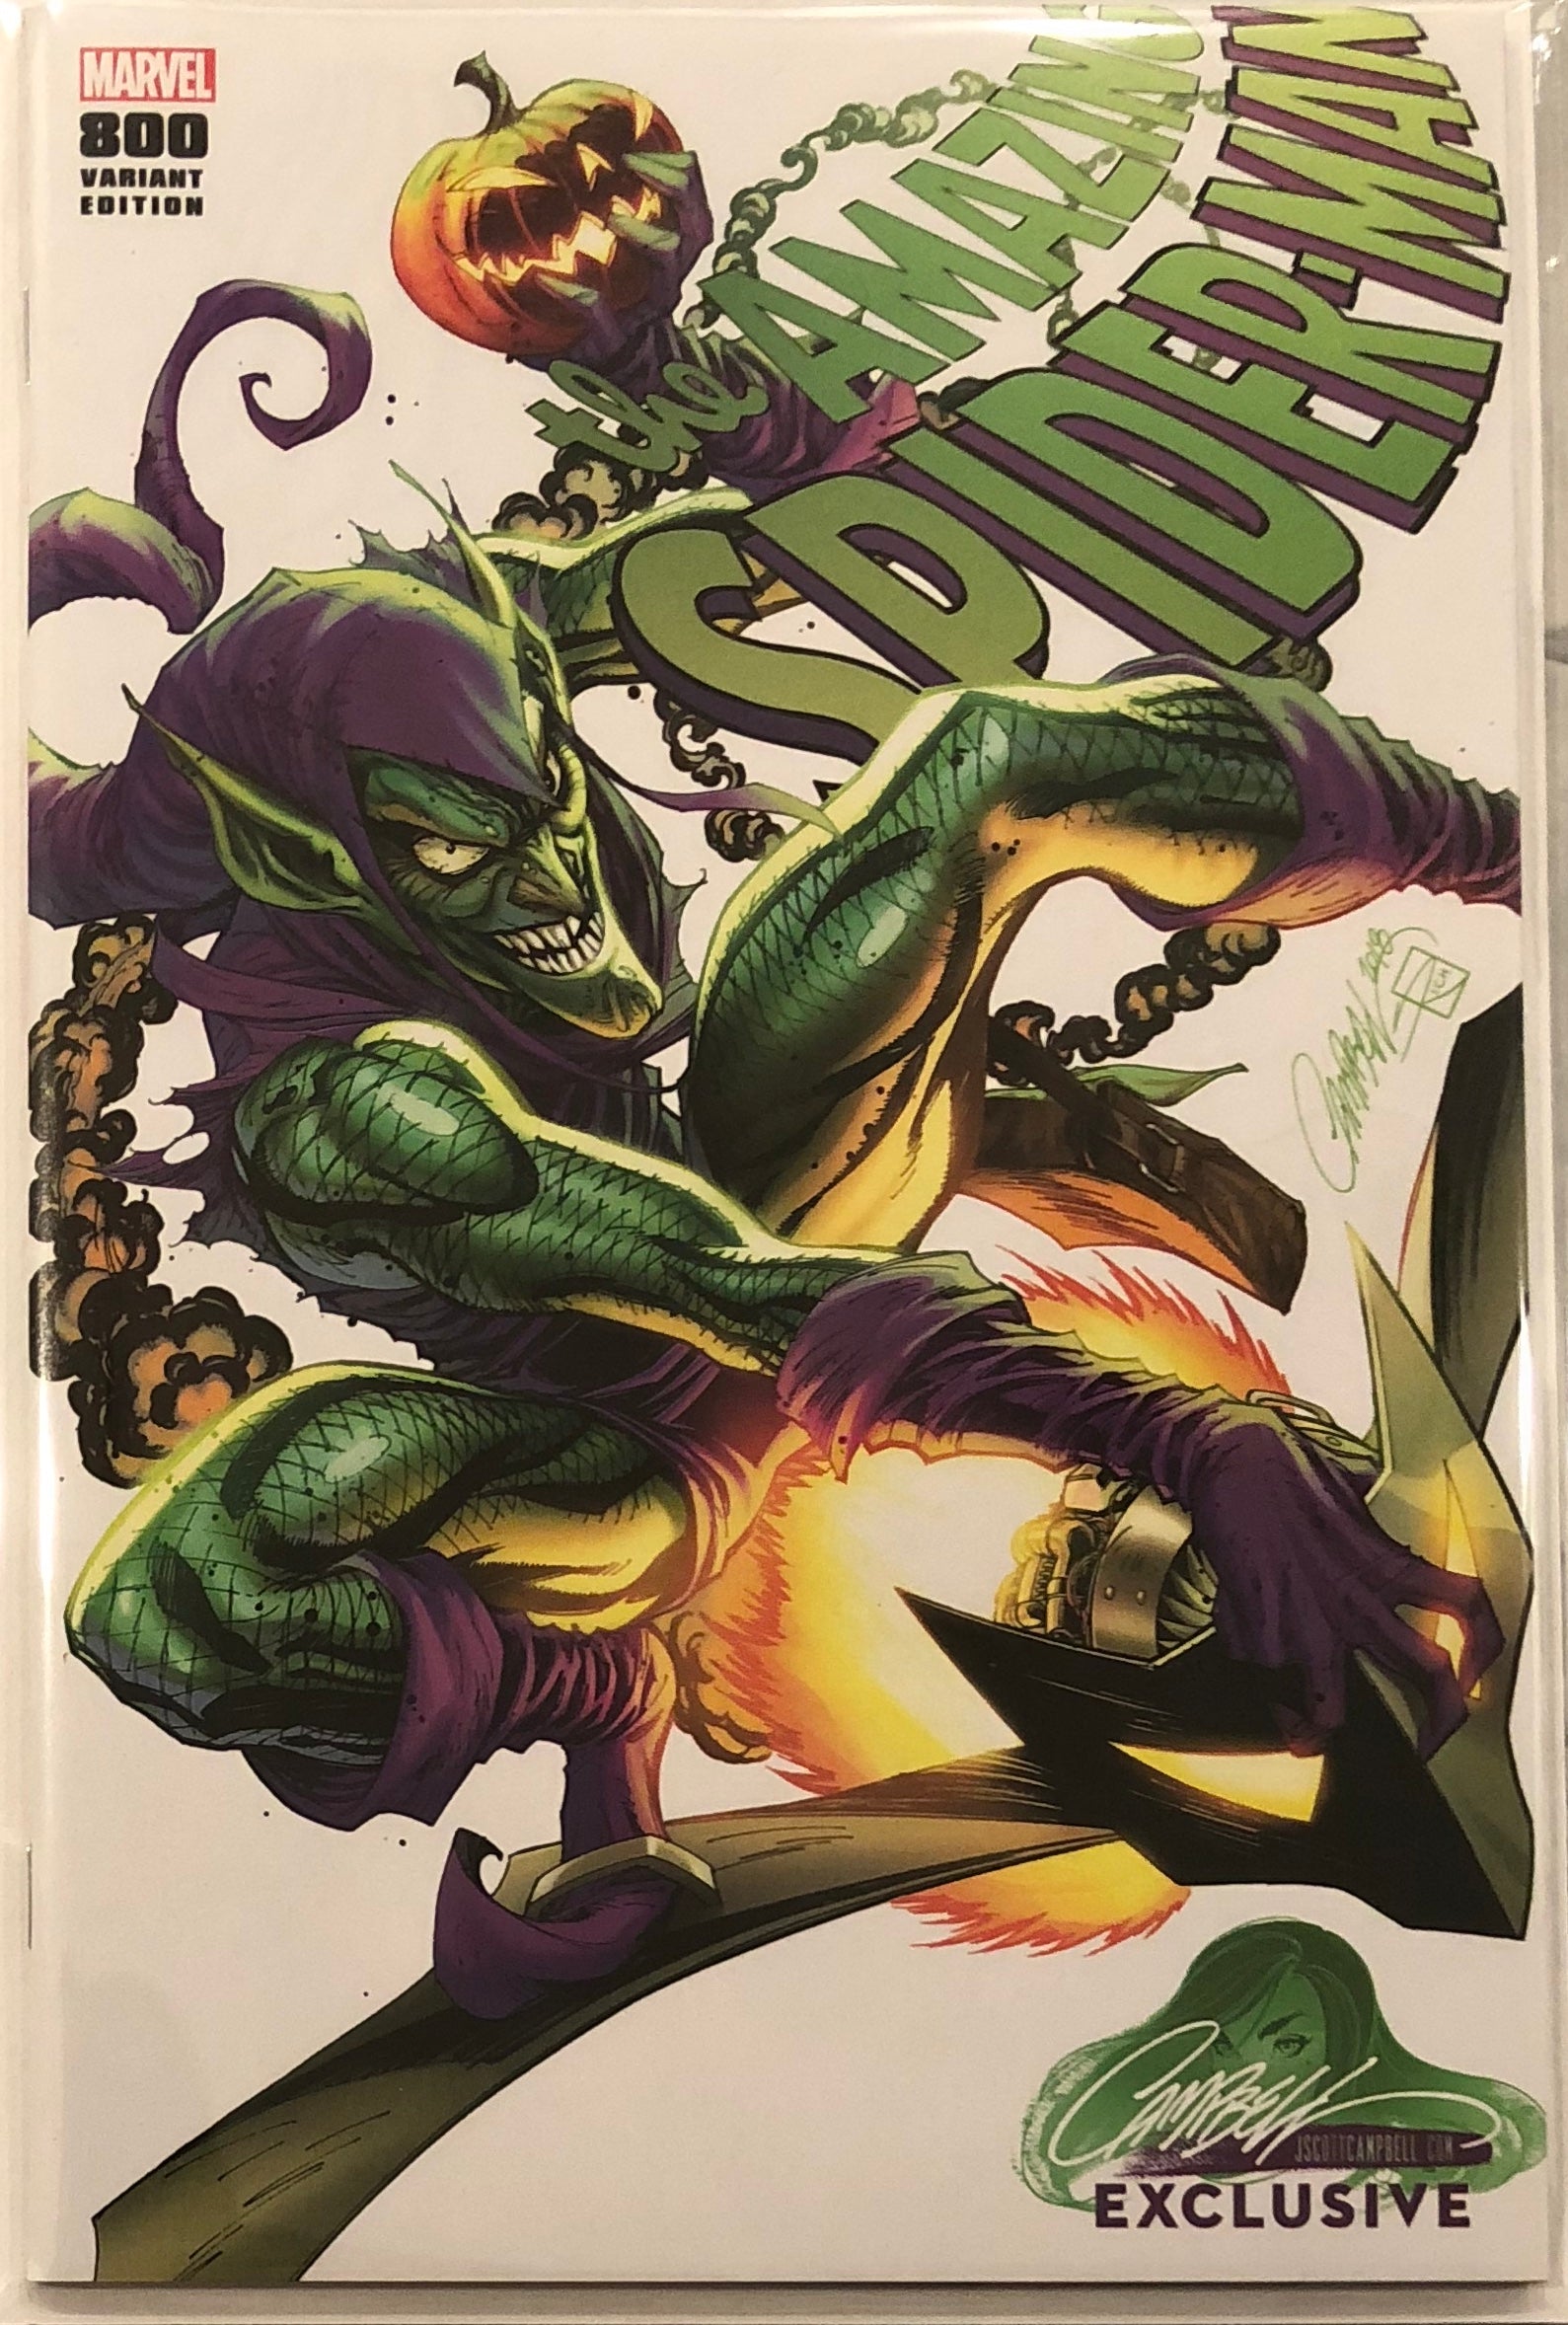 Amazing Spider-Man #800 J. Scott Campbell Edition E "Green Goblin" Exclusive